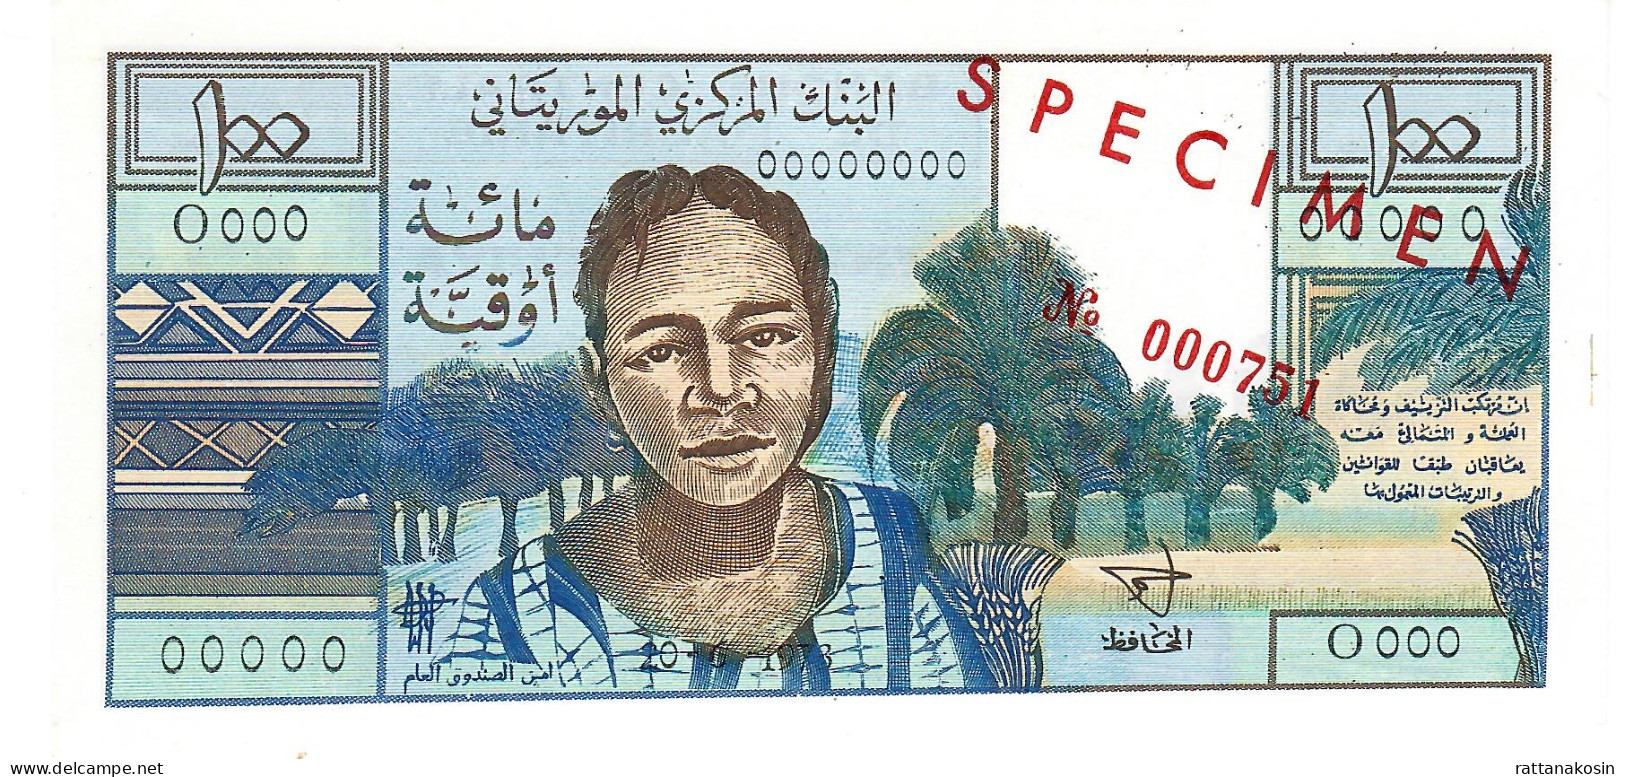 MAURITANIA P1s 100 OUGUIYA 20.6.1973 SPECIMEN   #000751   UNC. - Mauritanië